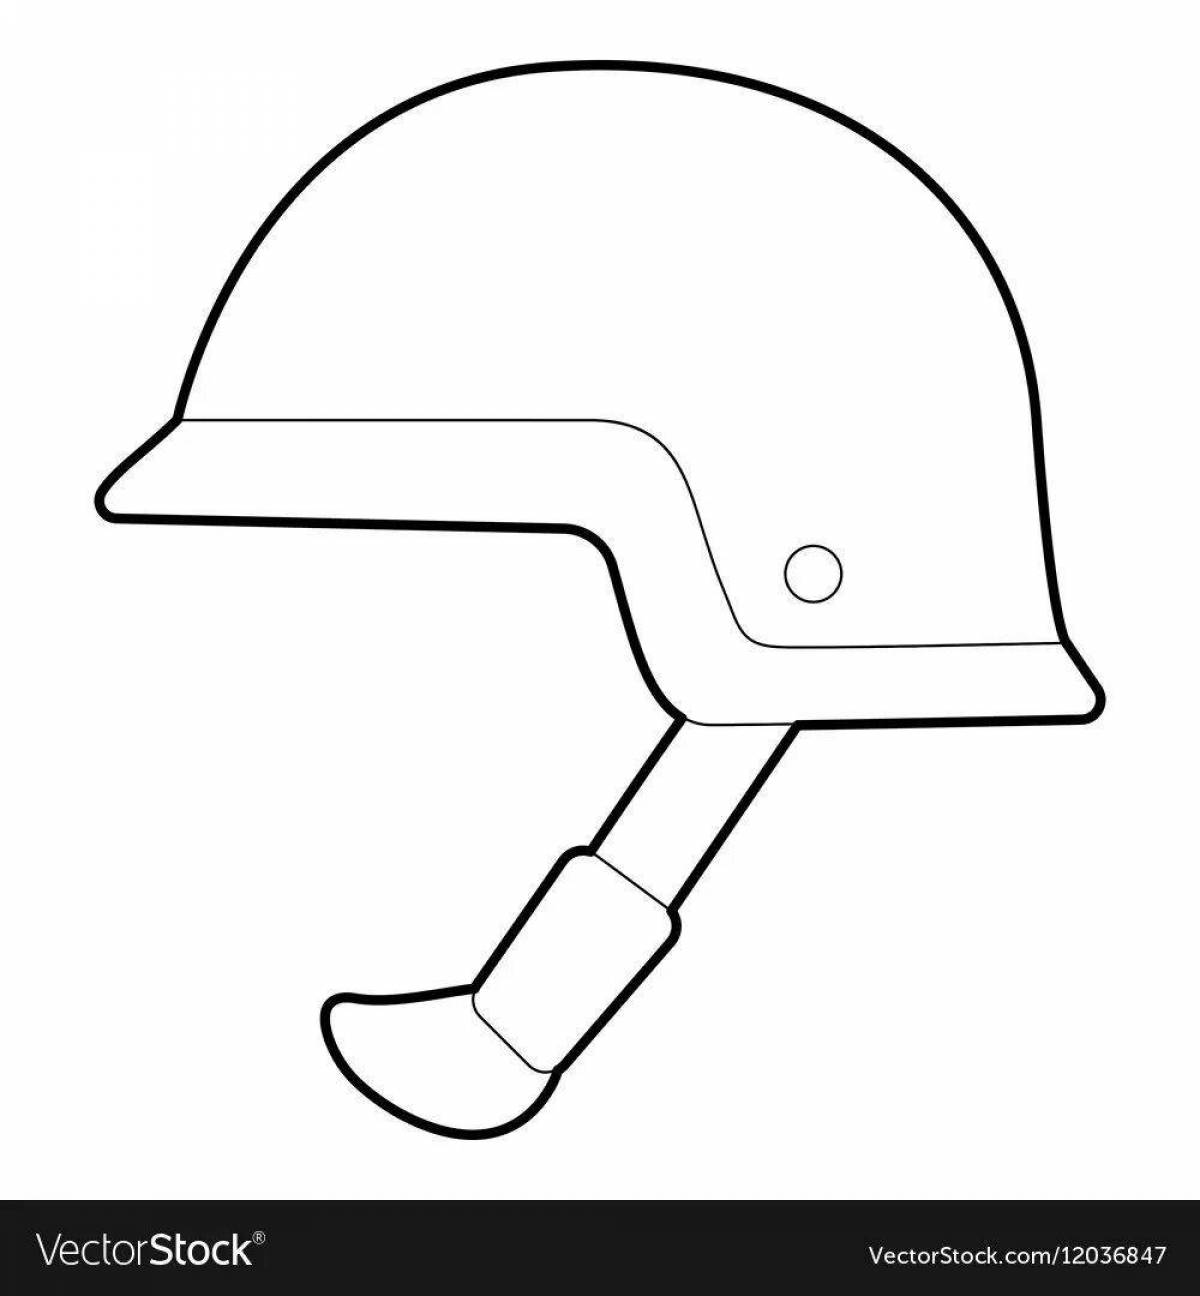 Children's military helmet coloring book